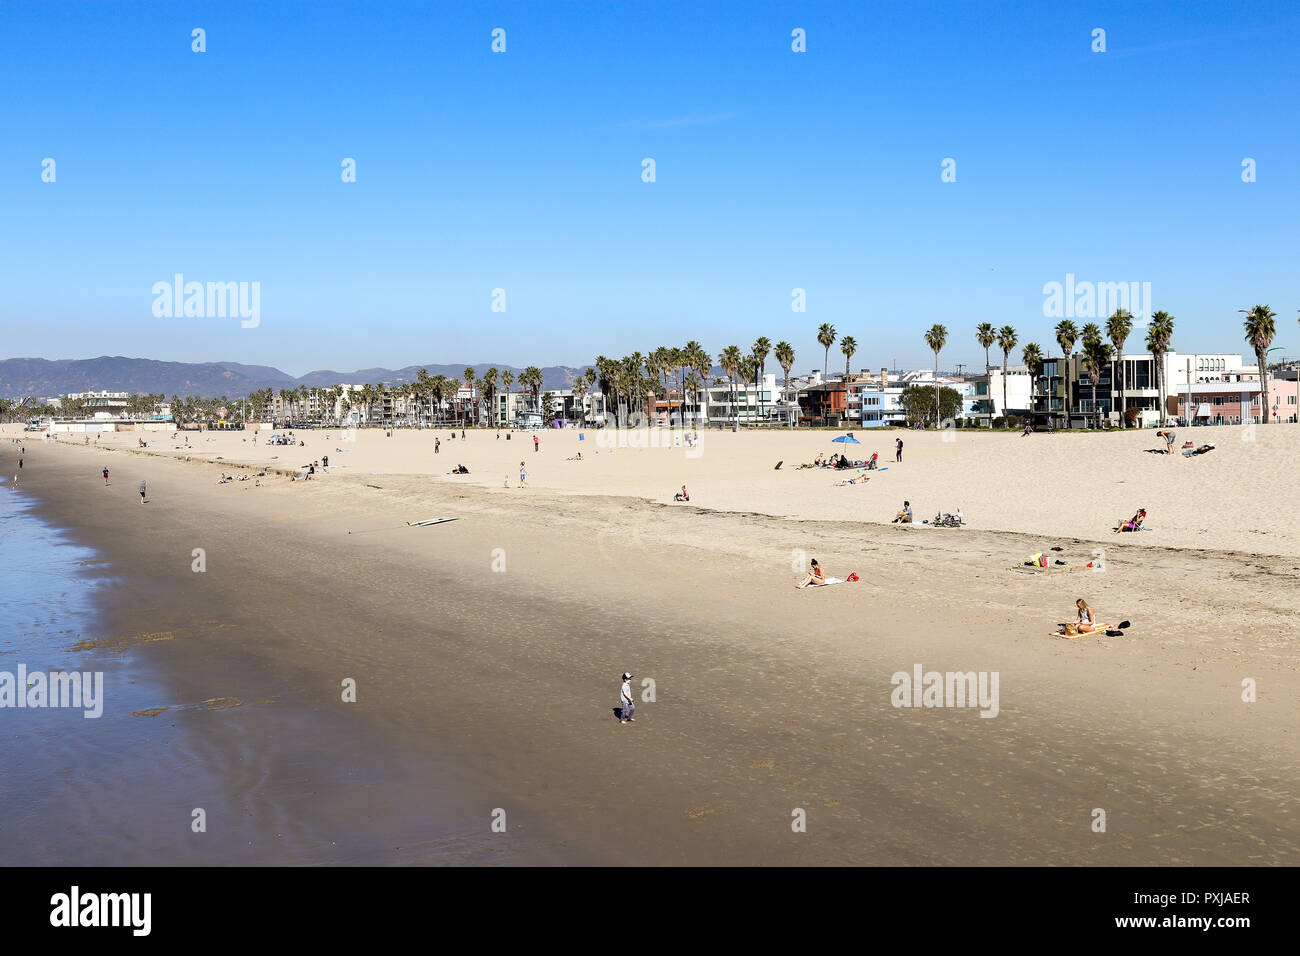 A typical southern California sunny day at Venice beach, California Stock Photo